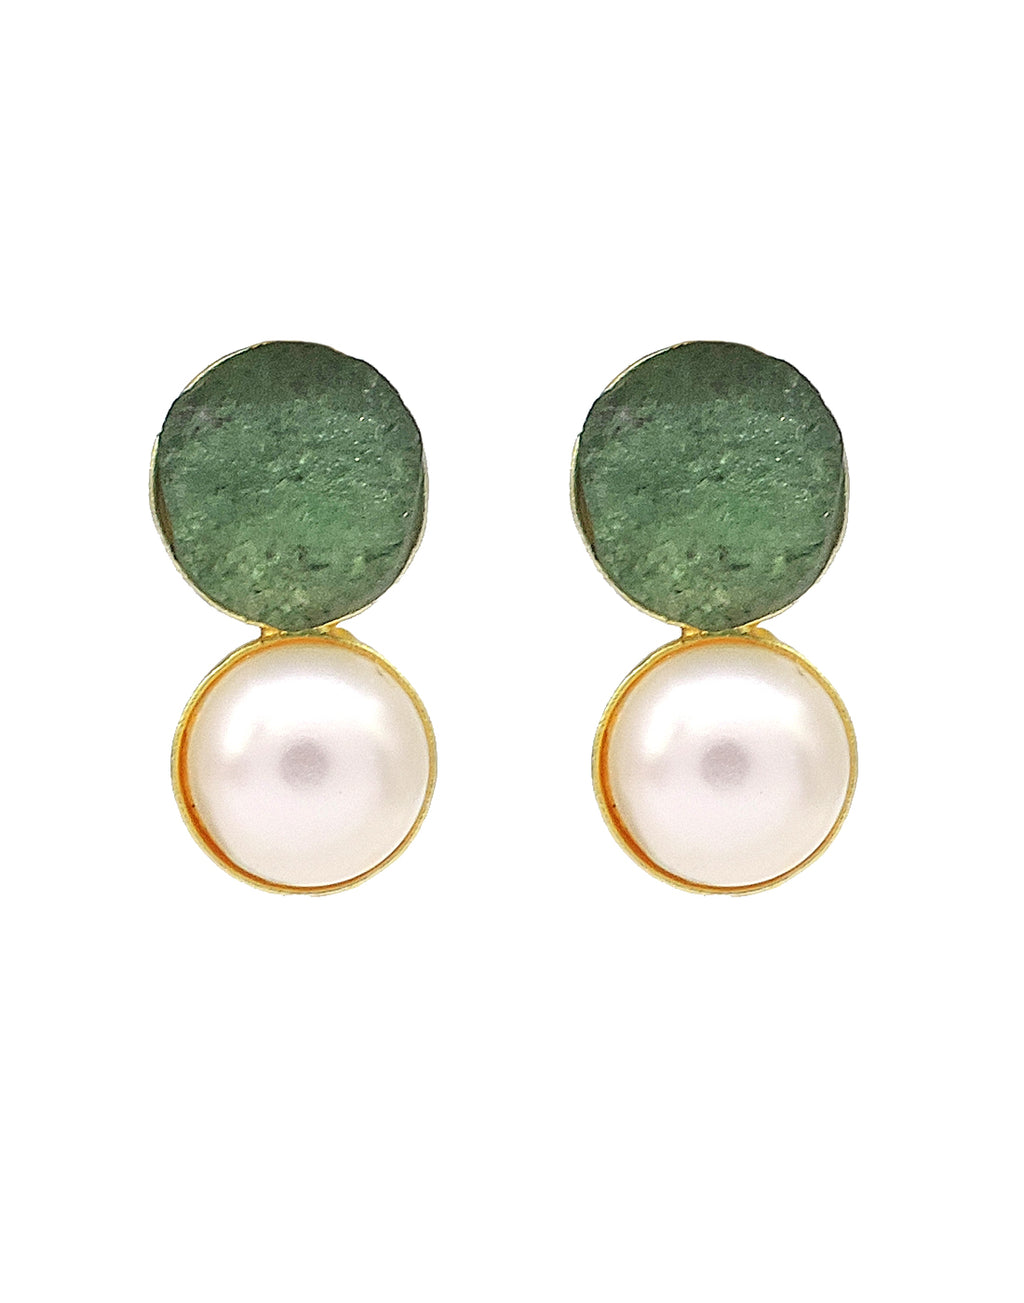 Pearl & Stone Earrings (Fluorite) - Statement Earrings - Gold-Plated & Hypoallergenic Jewellery - Made in India - Dubai Jewellery - Dori